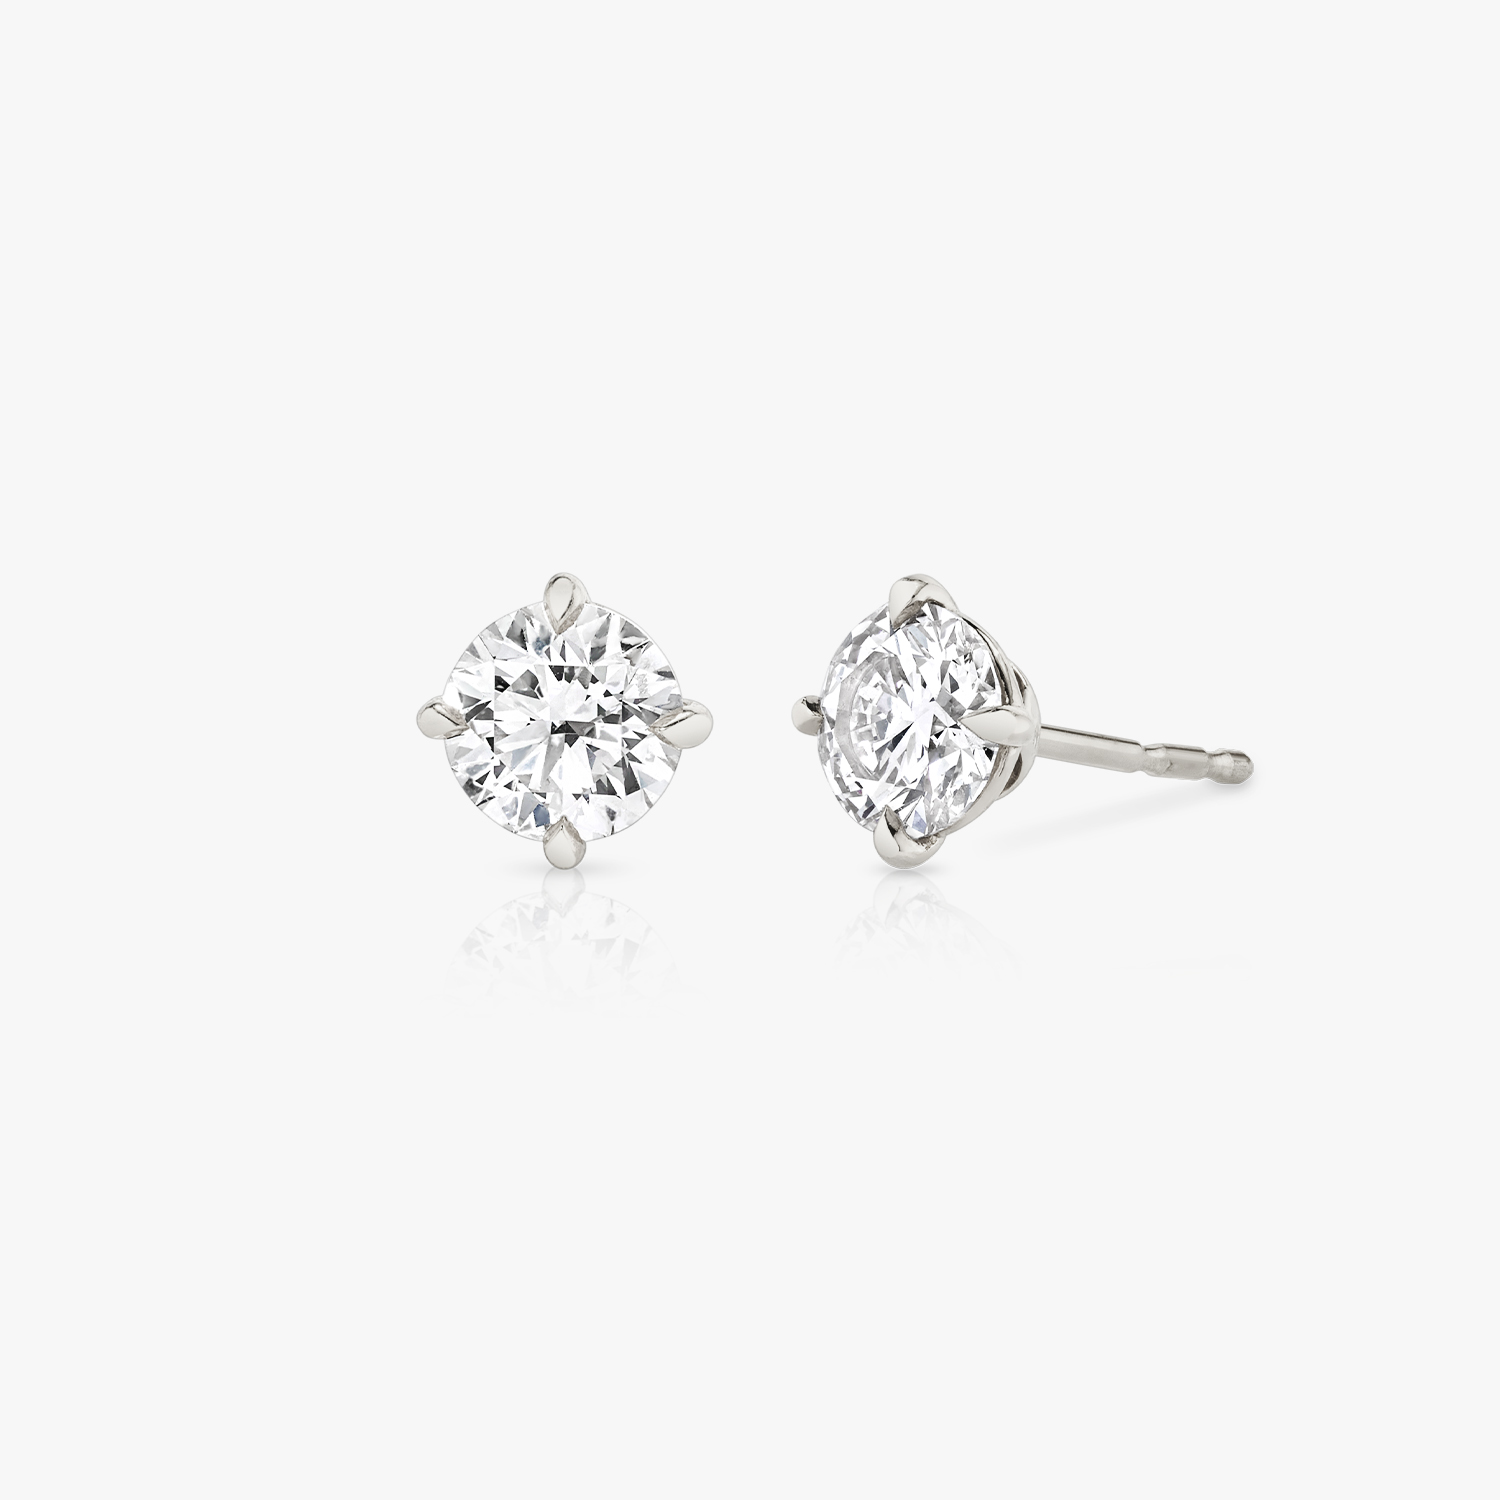 Tiffany  Co Earrings 206 Carat Diamond Stud  Pampillonia Jewelers   Estate and Designer Jewelry